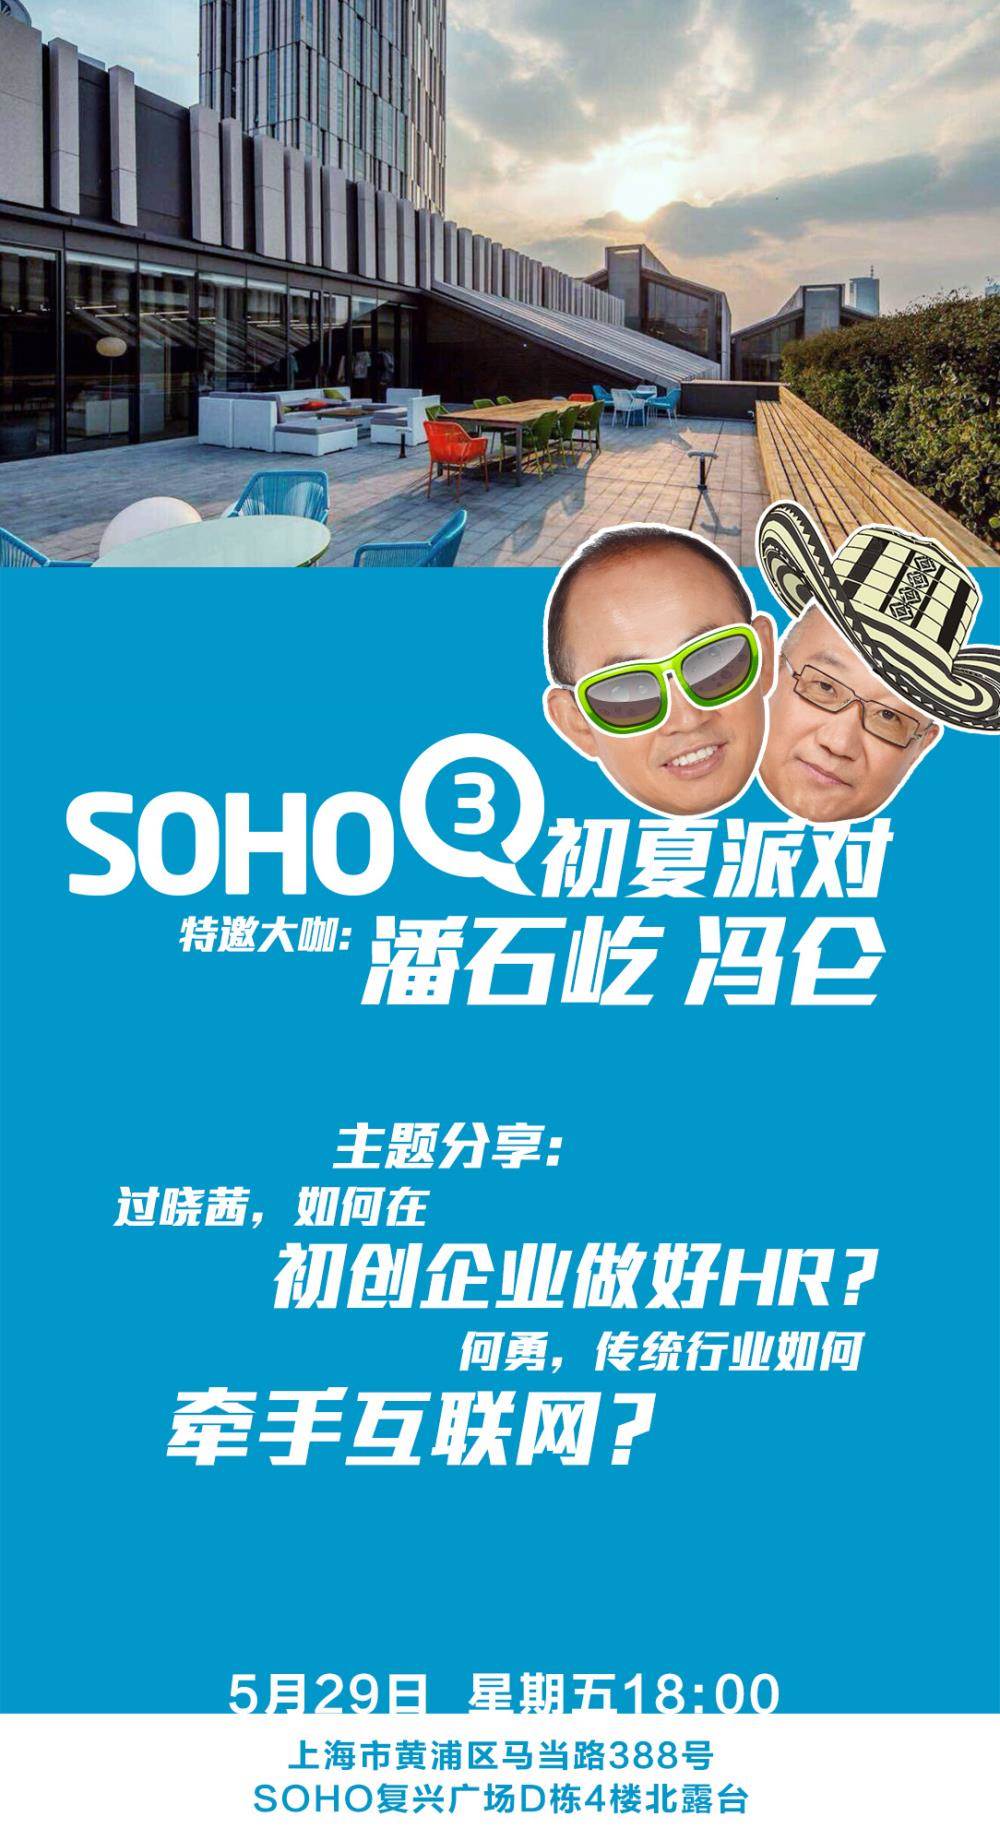 SOHO 3Q活动玻璃板 small 更新1.jpg